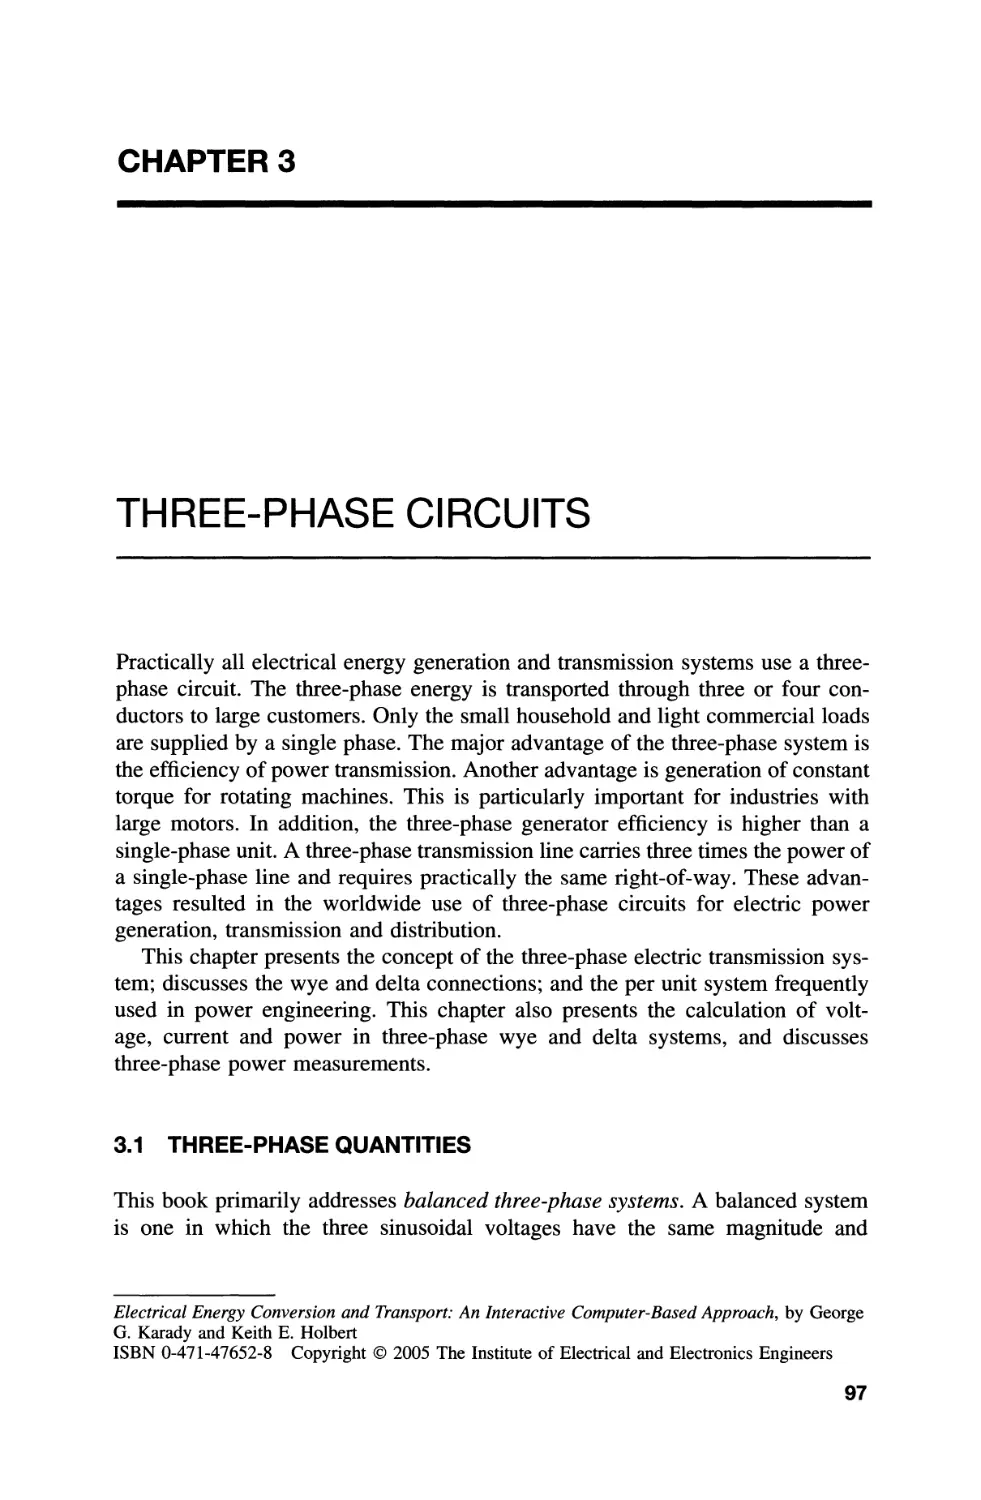 3 THREE-PHASE CIRCUITS